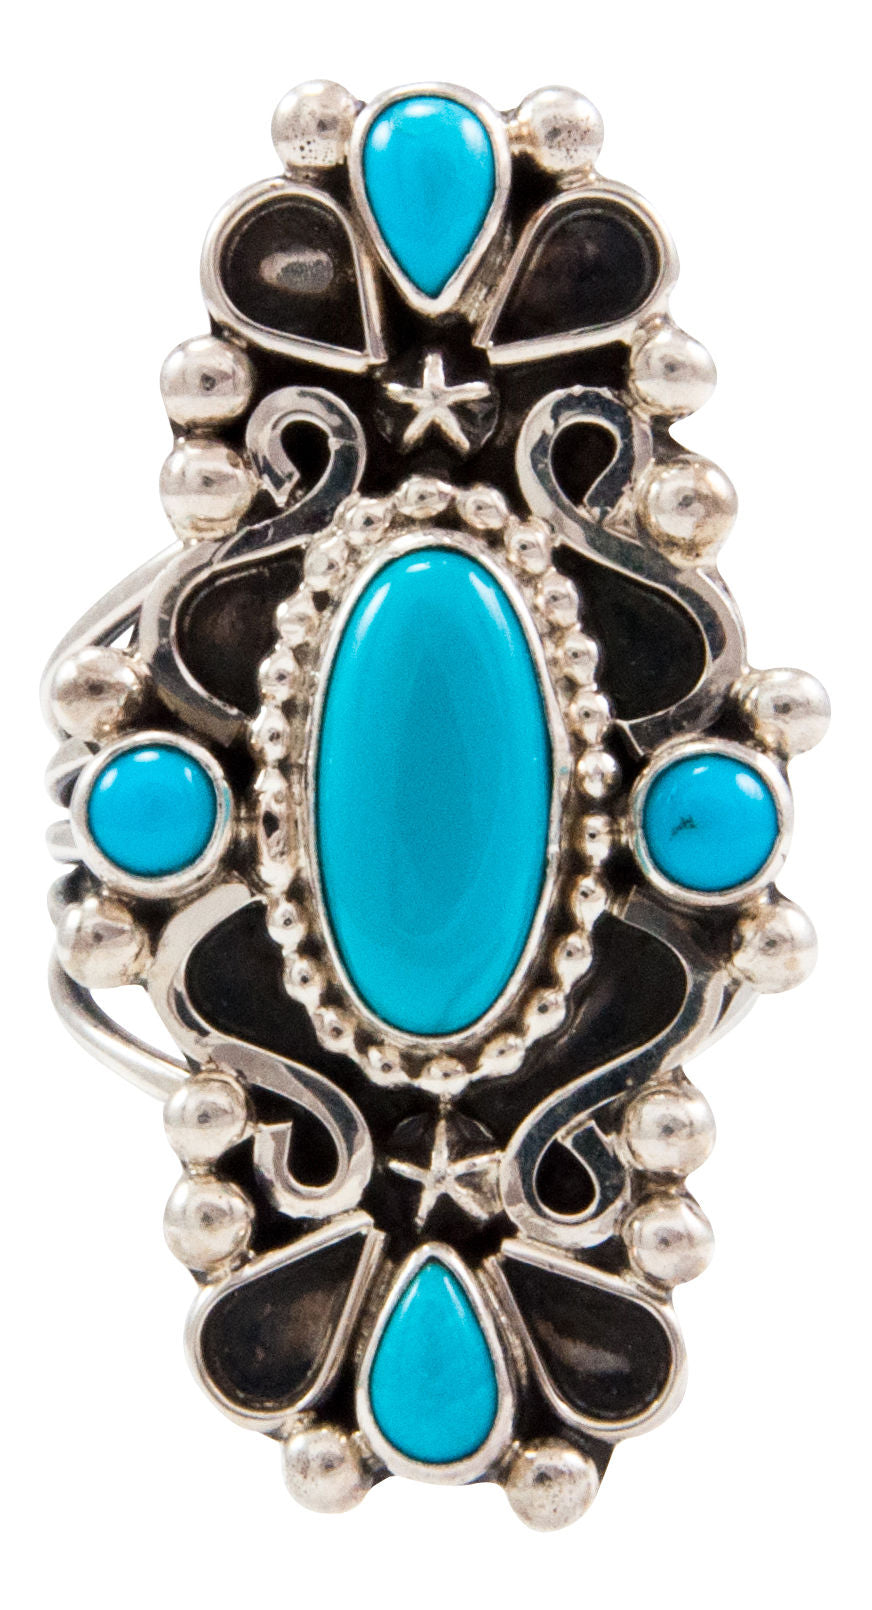 Navajo Native American Sleeping Beauty Turquoise Ring Size 7 3/4 by Kathleen Chavez SKU232658